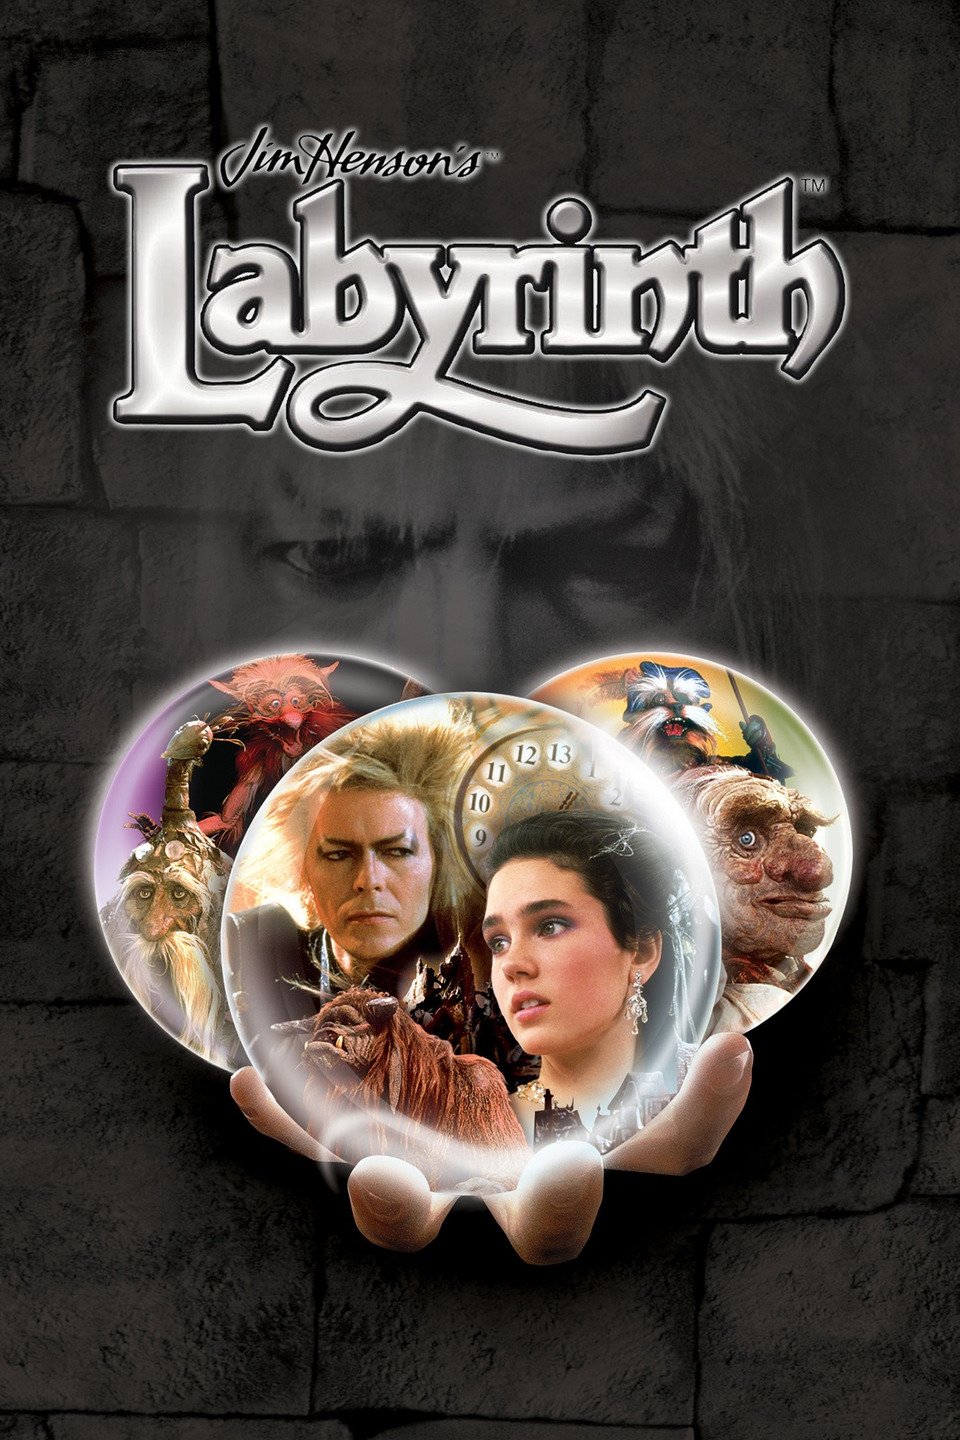 labyrinth 1986